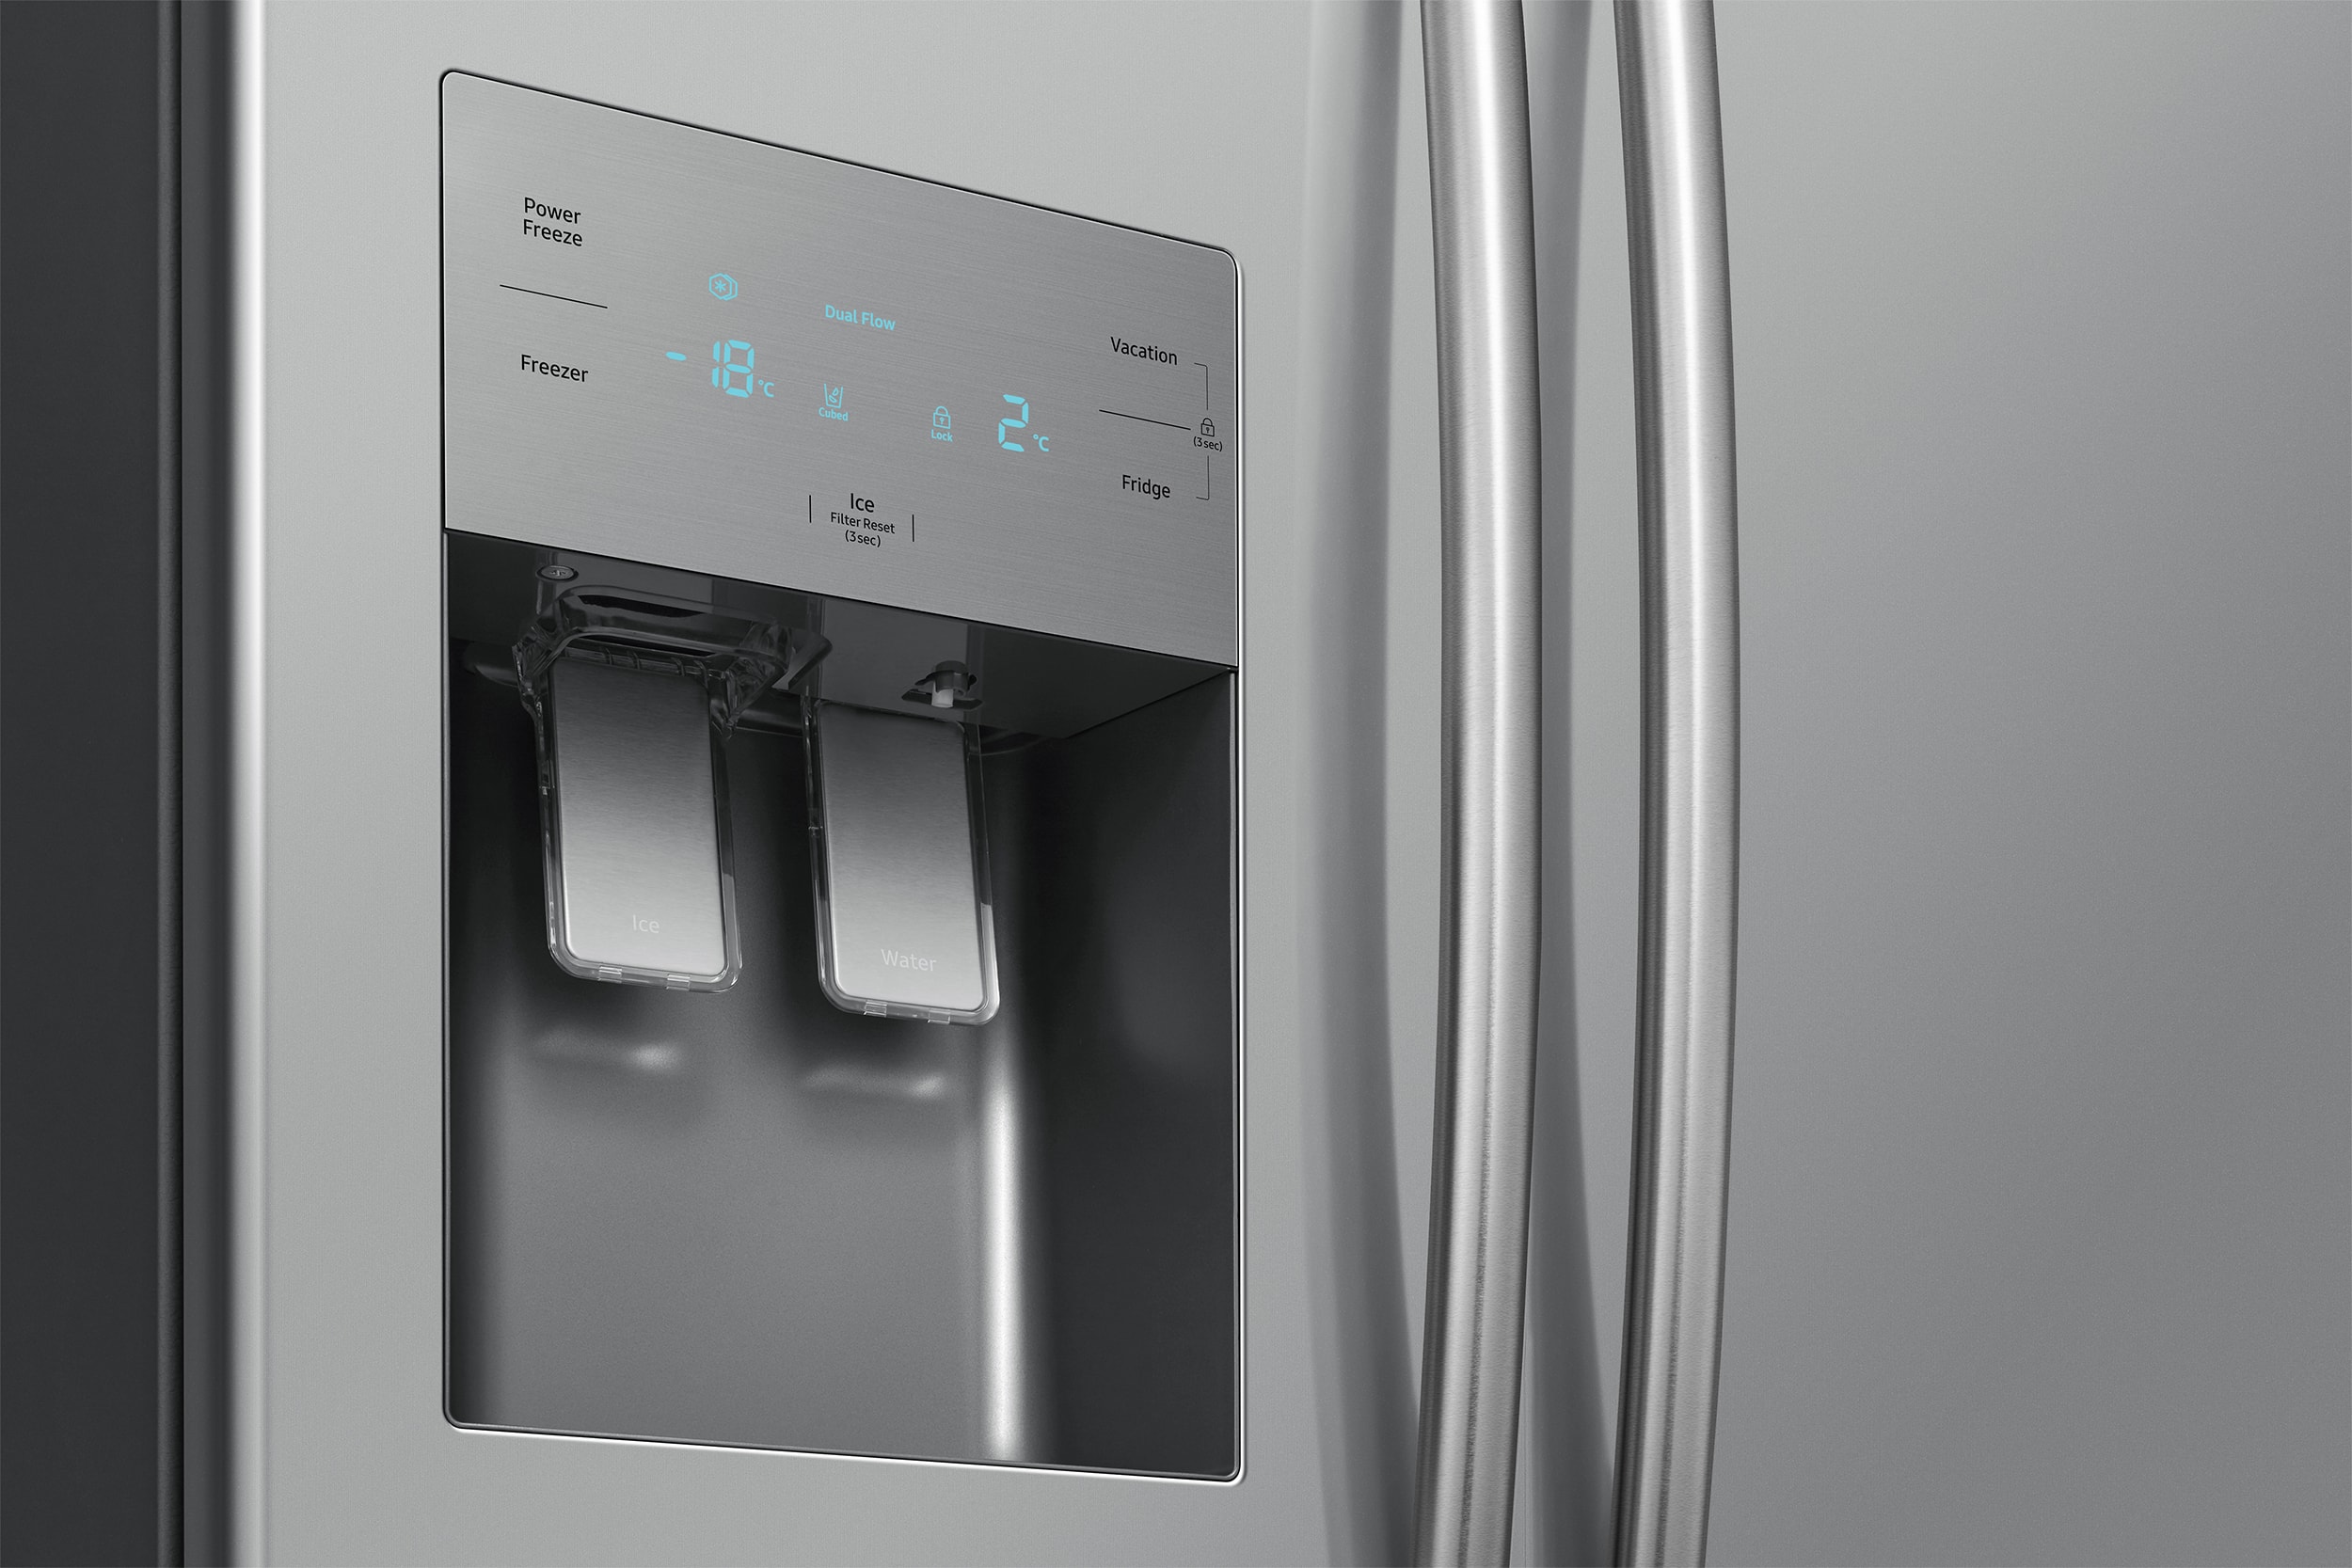 refrigerateur-congelateur-2-portes-501-litres-de-marque-samsung